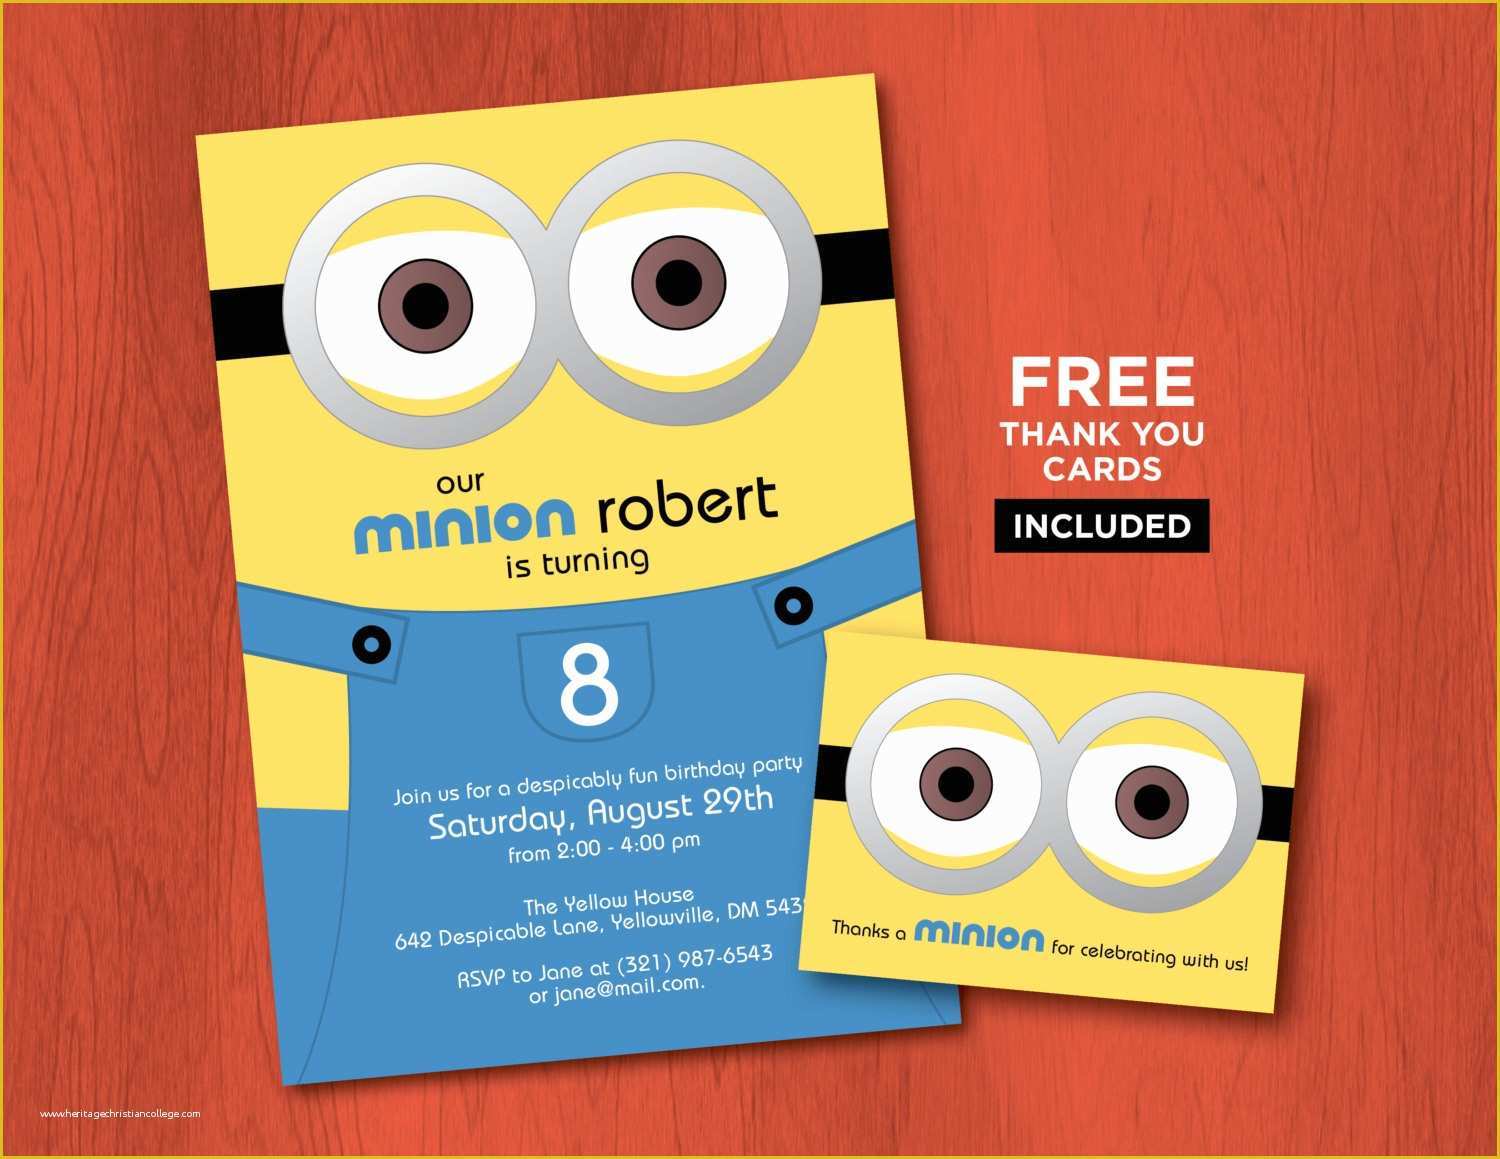 Free Personalized Birthday Invitation Templates Of Printable Minion Birthday Invitations Personalized